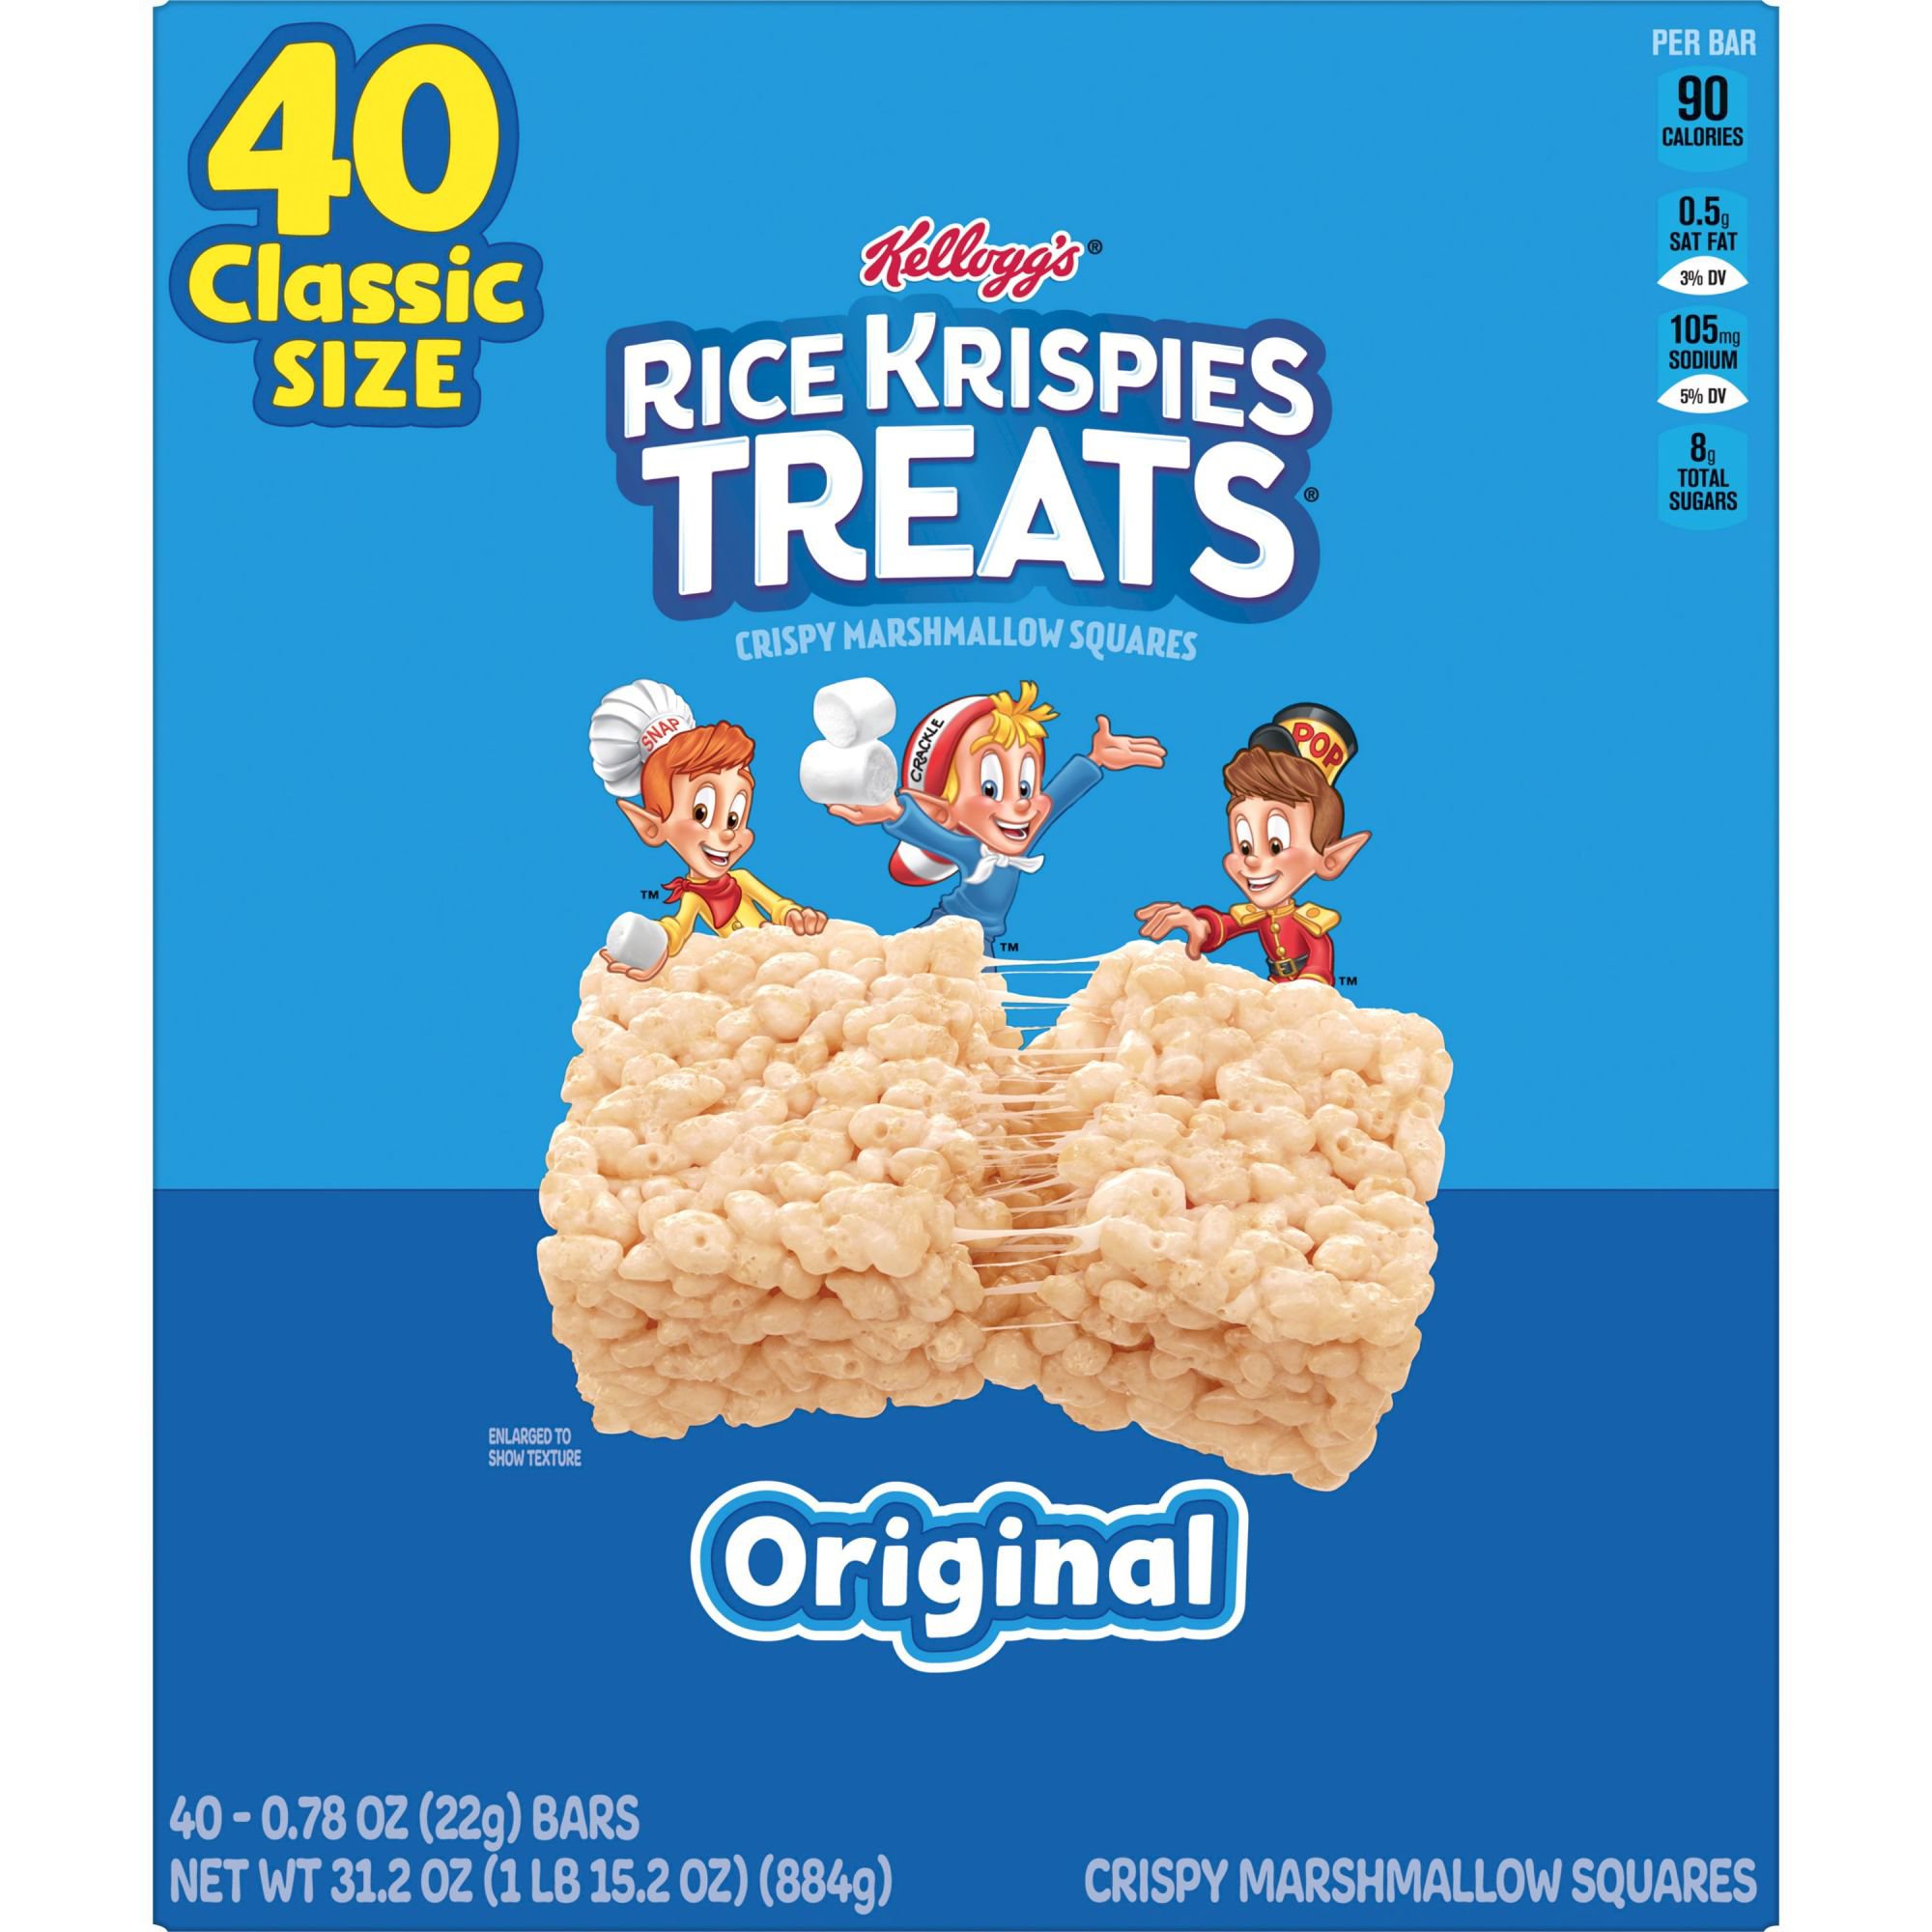 Rice Crispy Treats Packaged